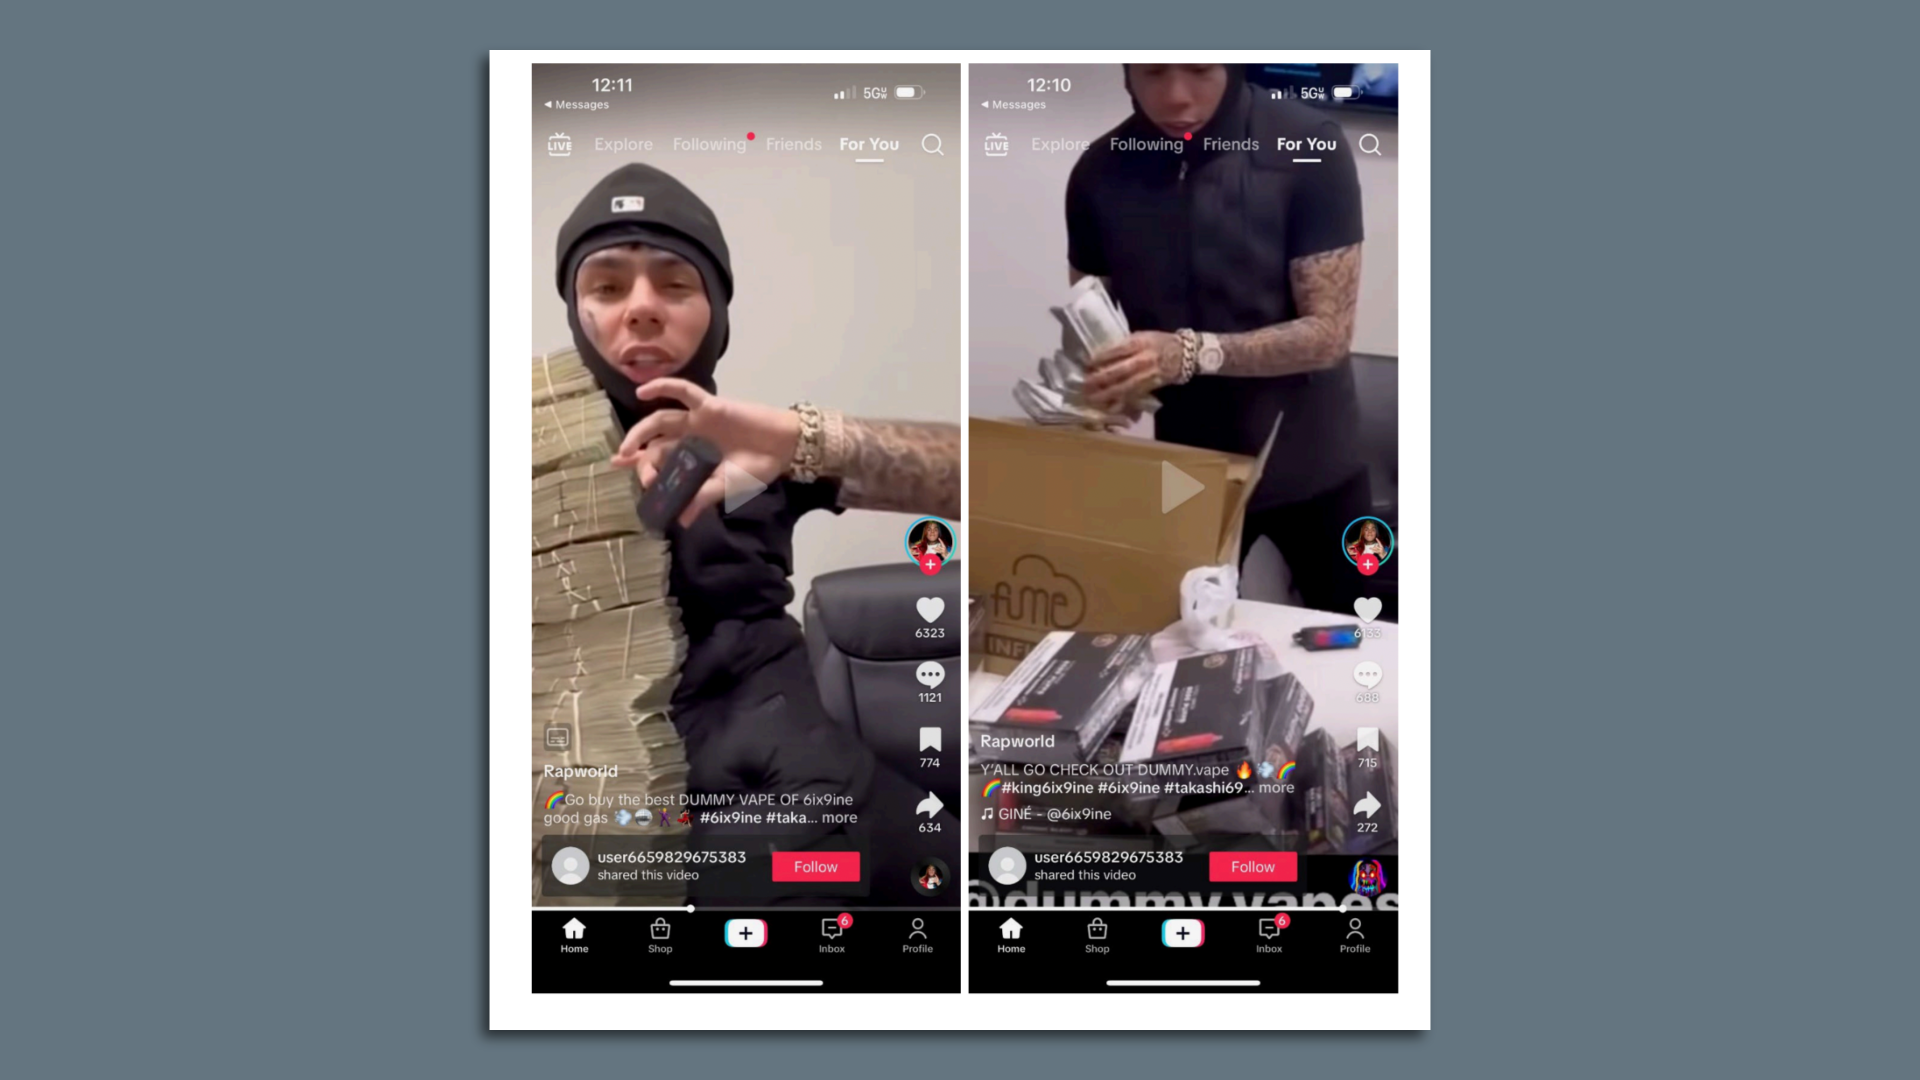 Screenshots show a man in a black balaclava counting stacks of dollar bills from a cardboard box marked "Fume." 